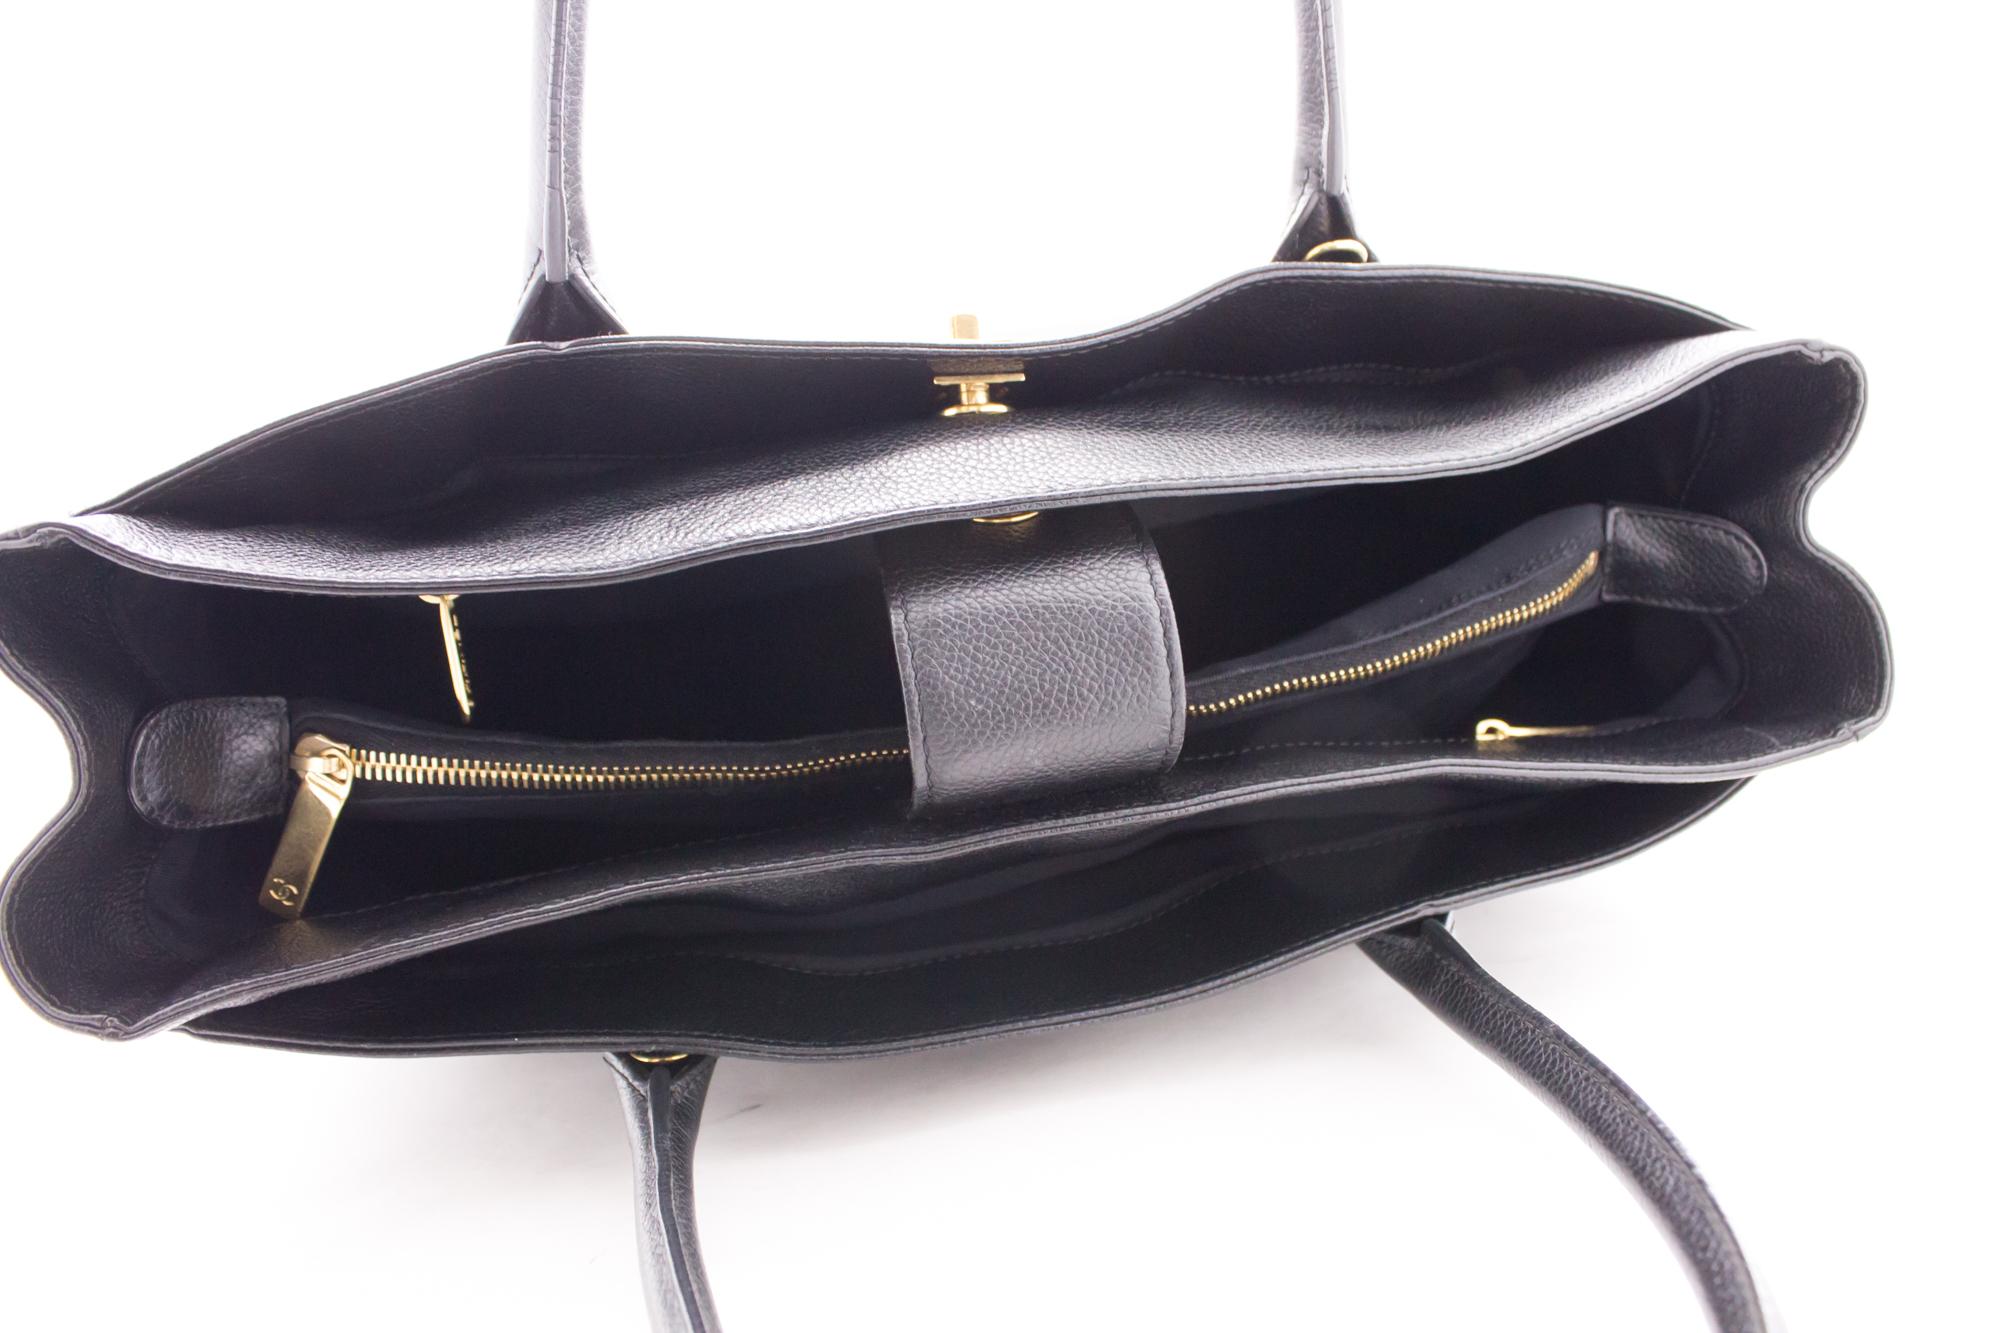 CHANEL Executive Tote Caviar Shoulder Bag Handbag Black Gold Strap 5